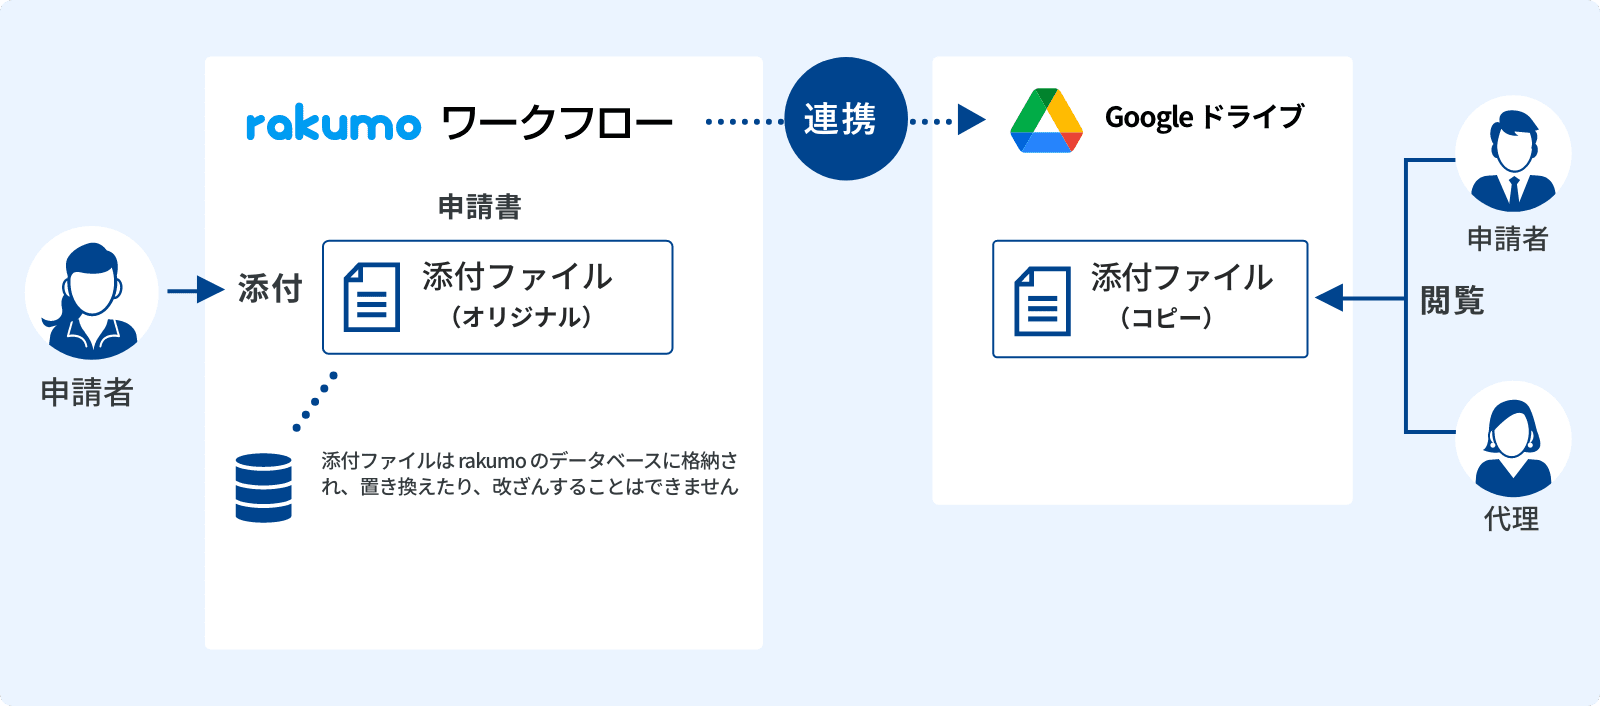 rakumo ワークフロー Google ドライブとの連携イメージ